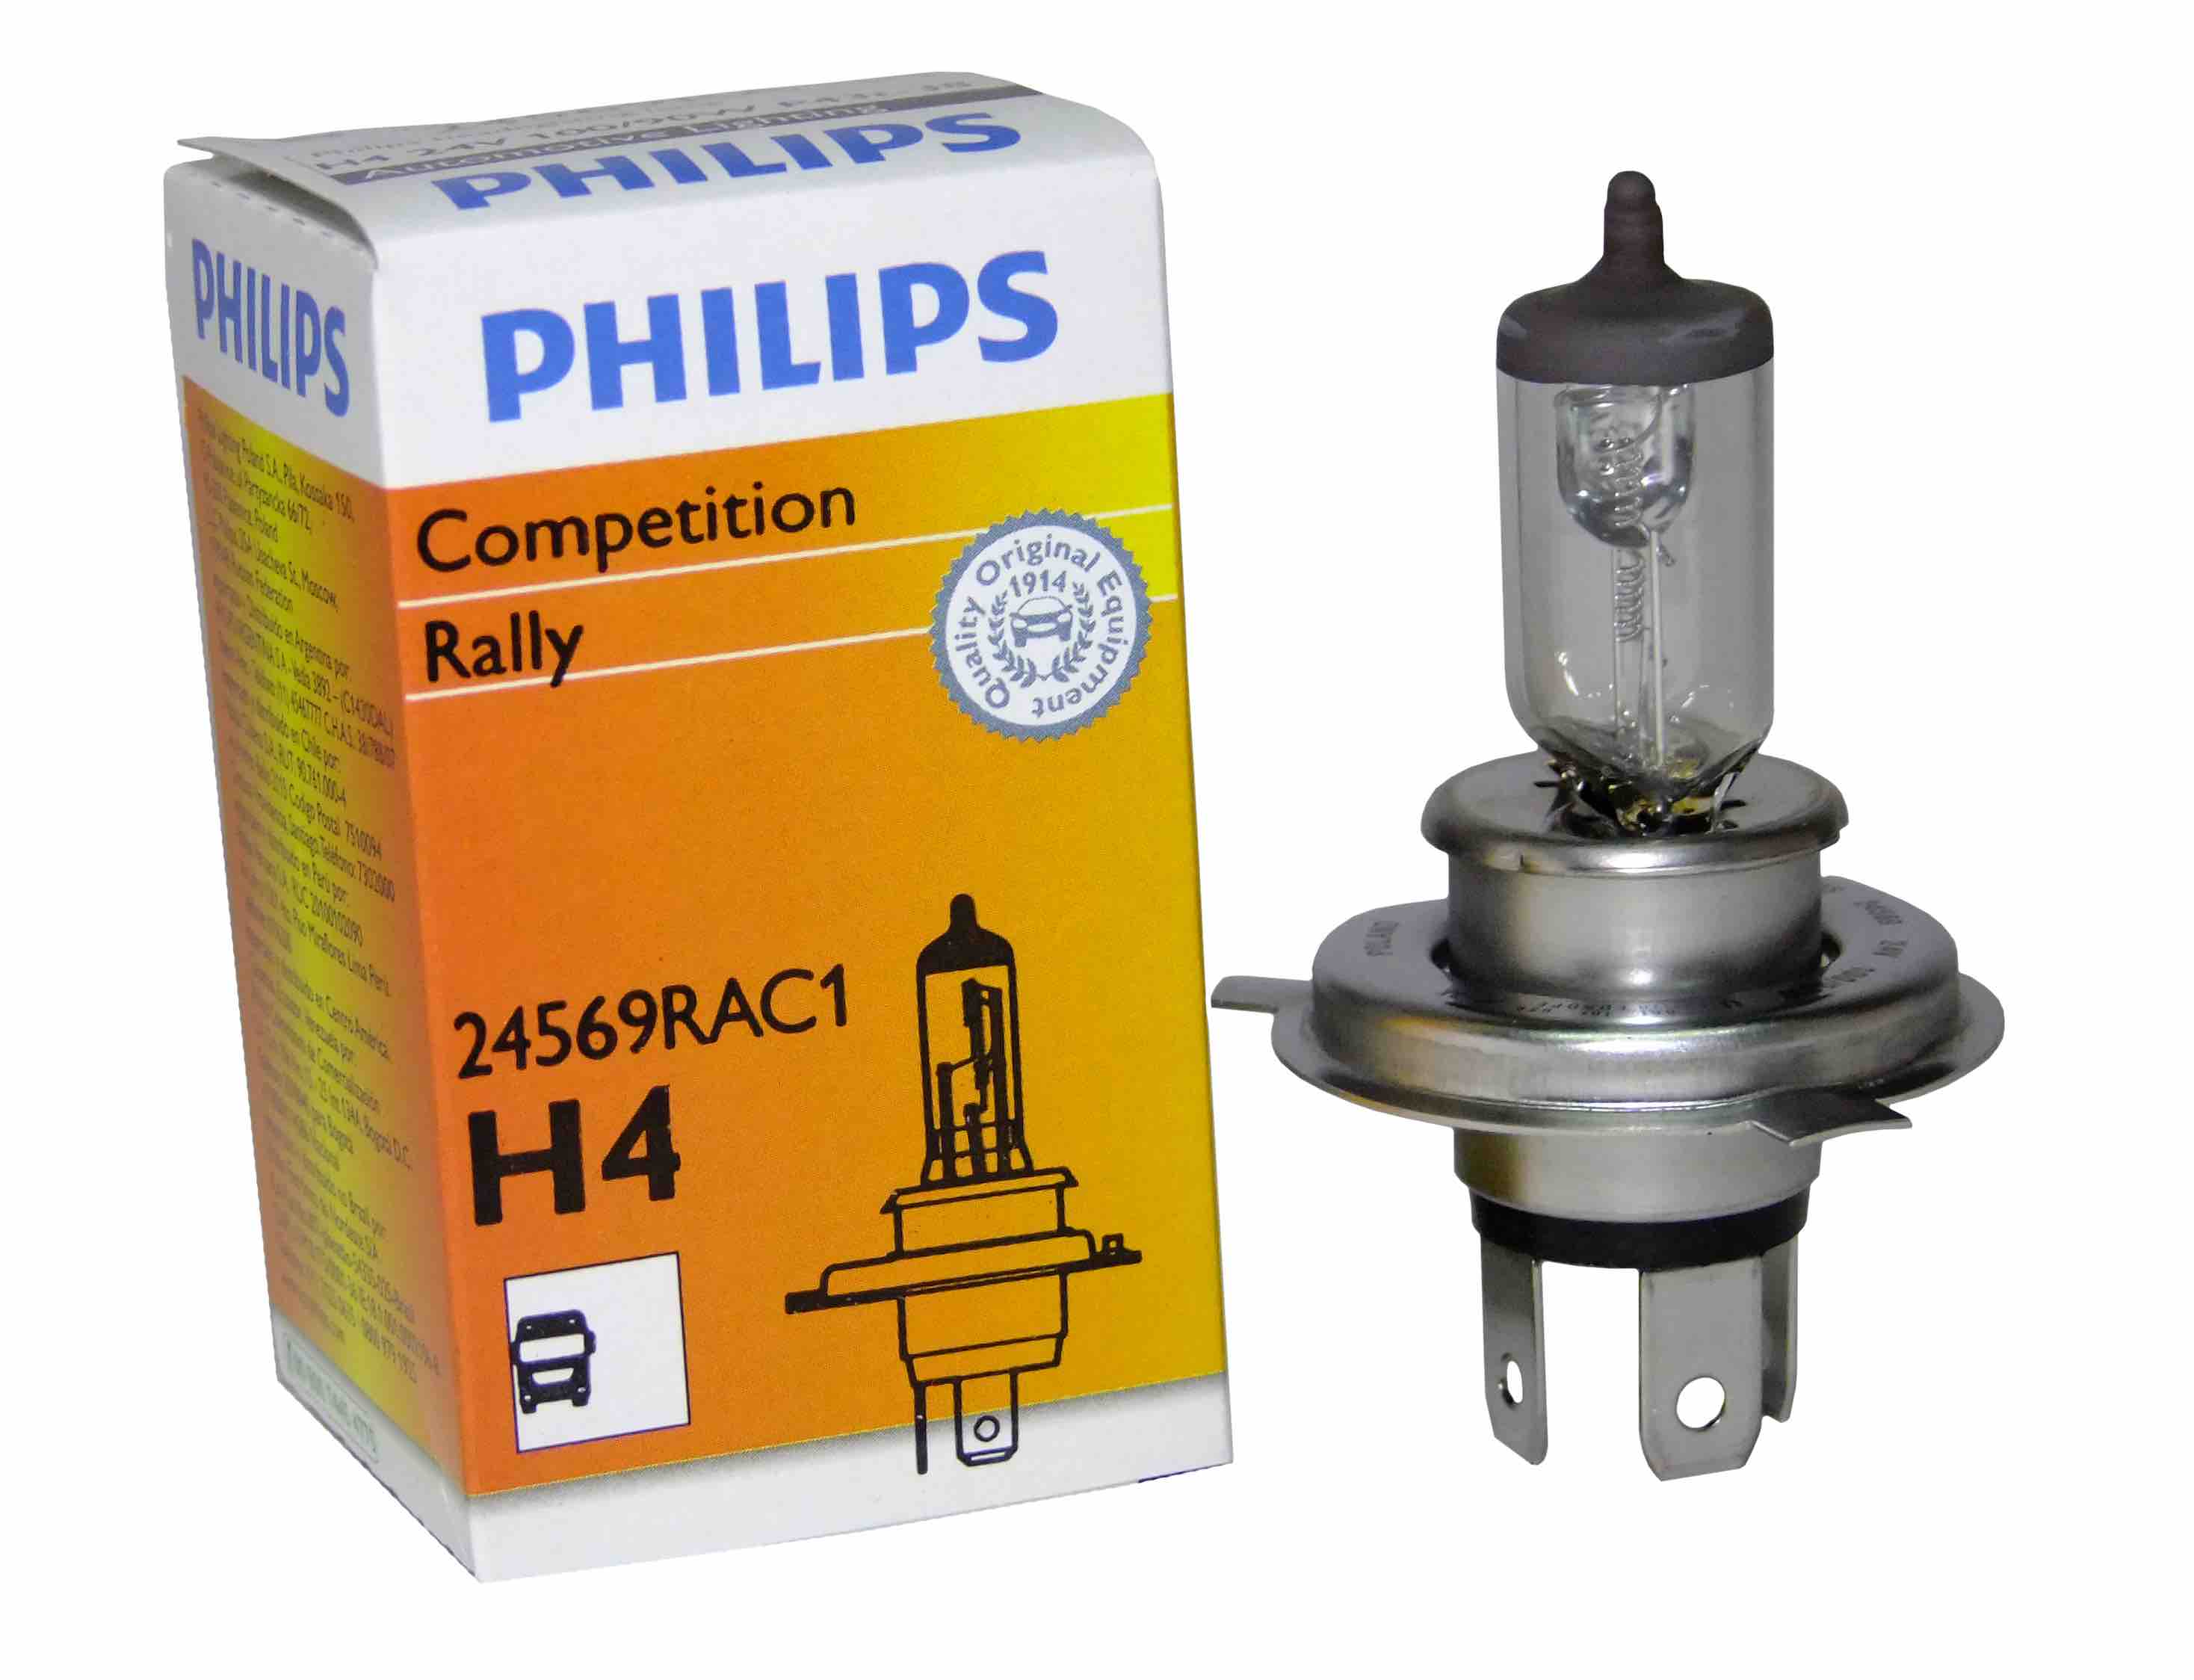  Philips Vision H4 100/90w Rally 12v 24569RAC1